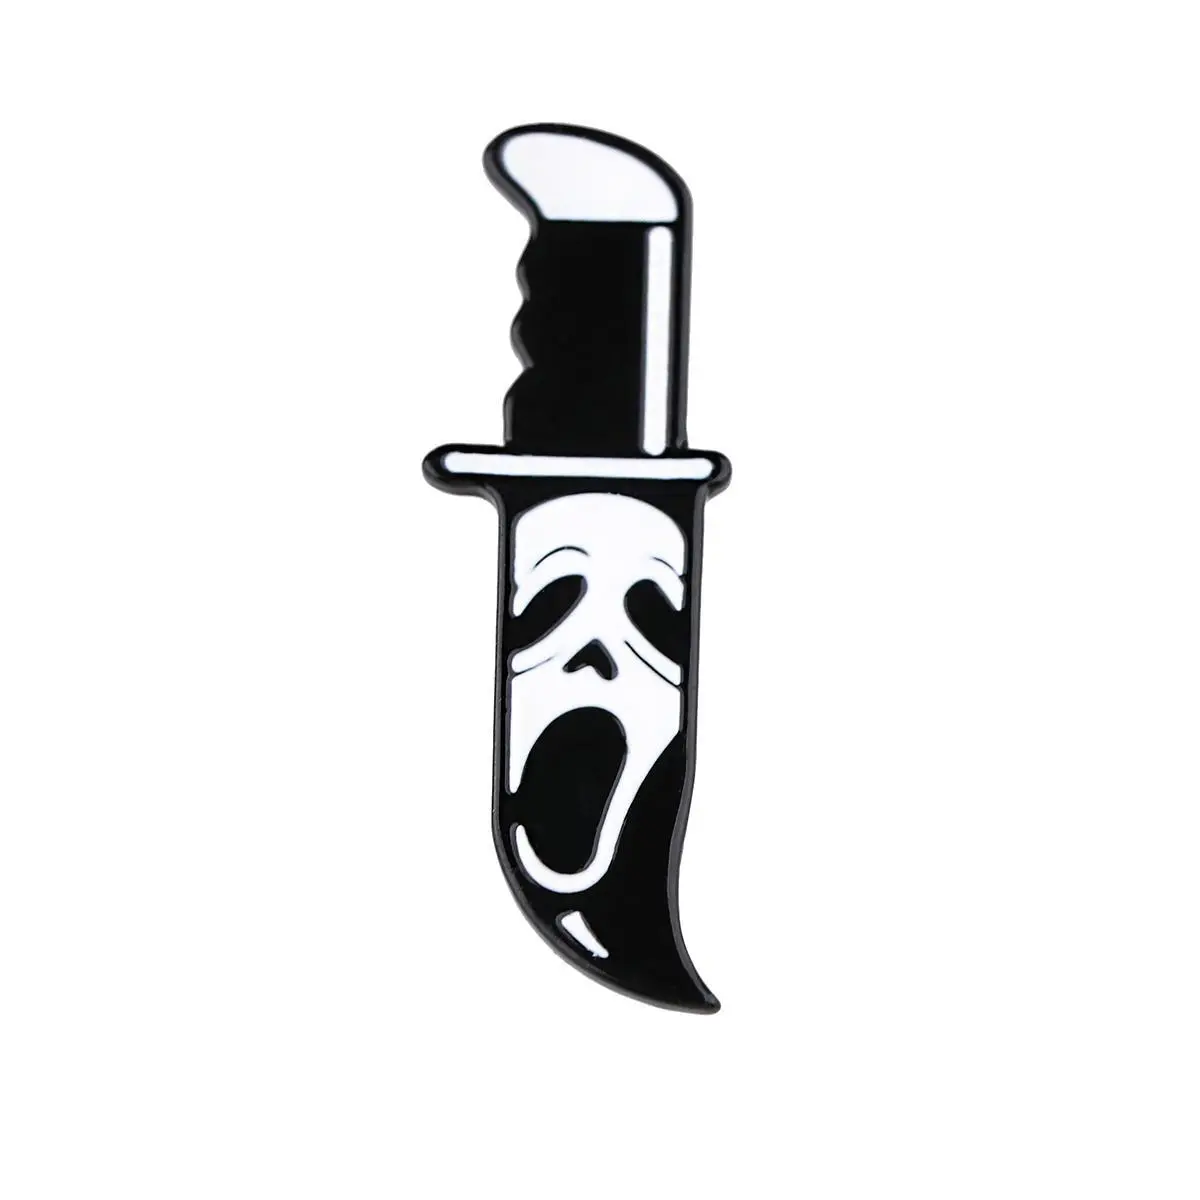 Scream ghost face knife classic horror movie enamel metal pin